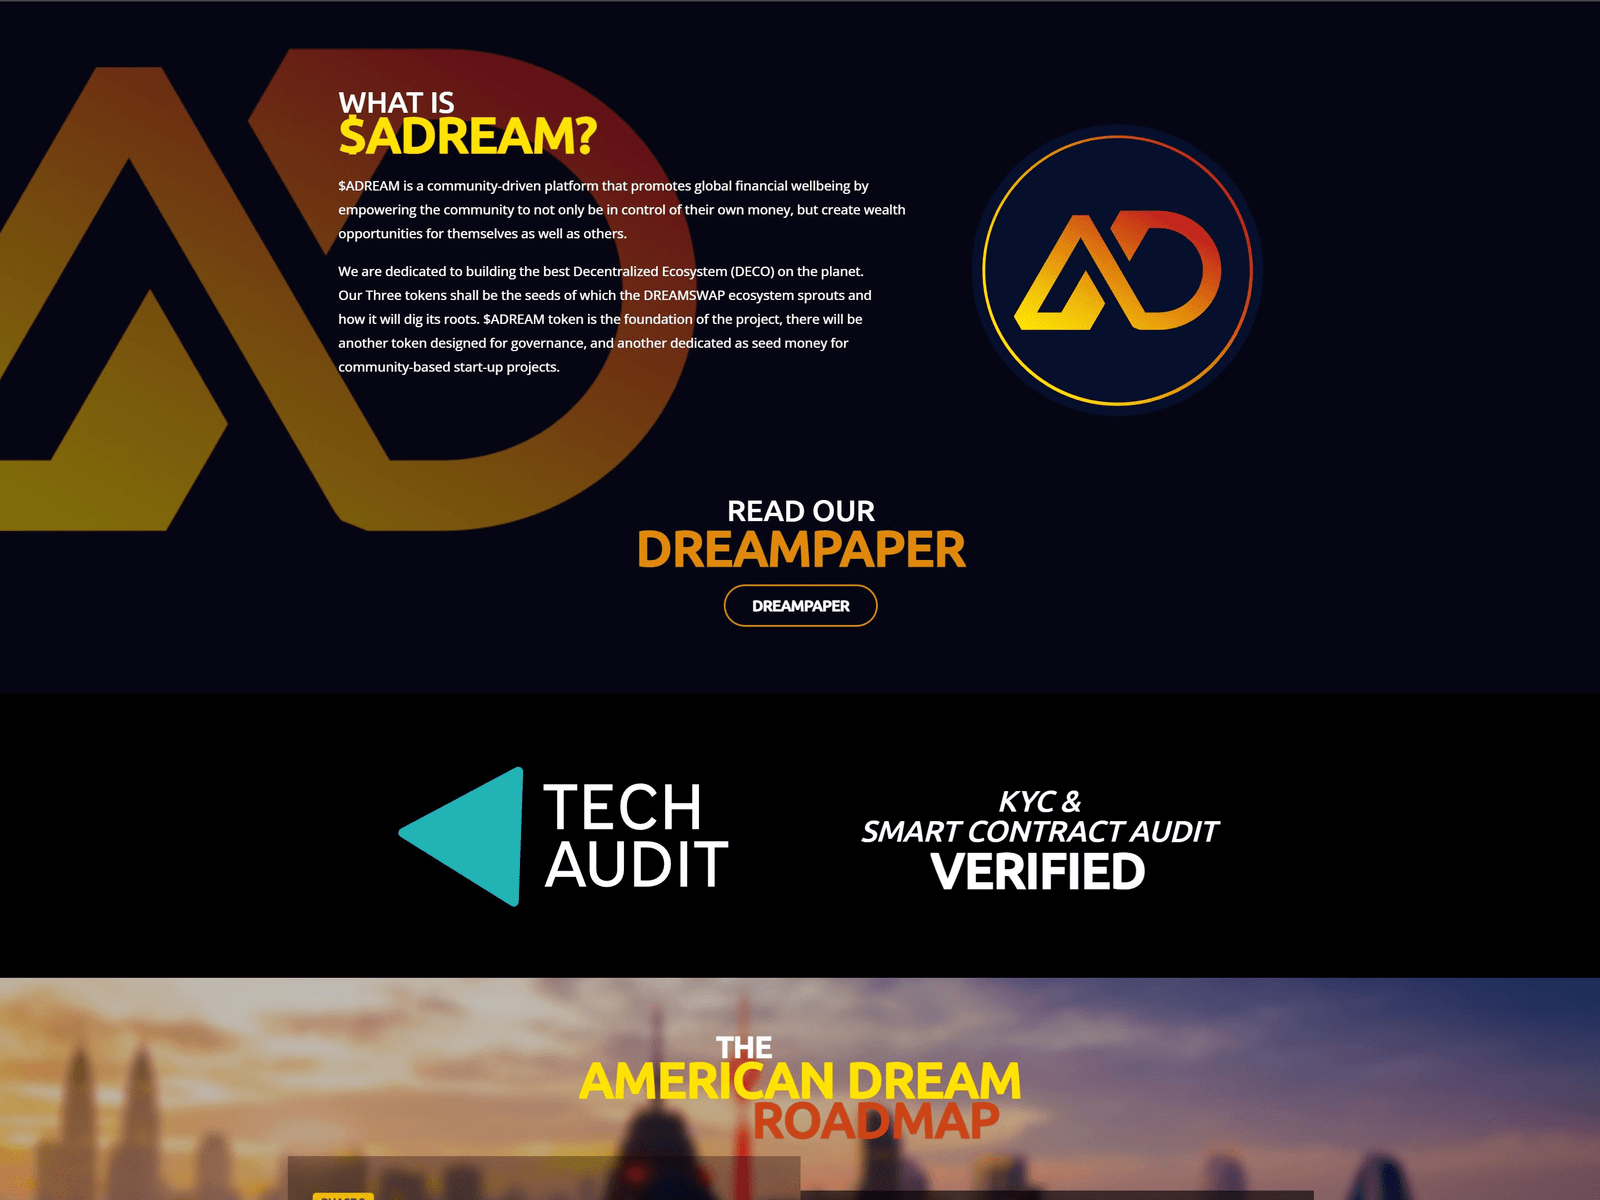 American Dream Token cryptocurrency project website design